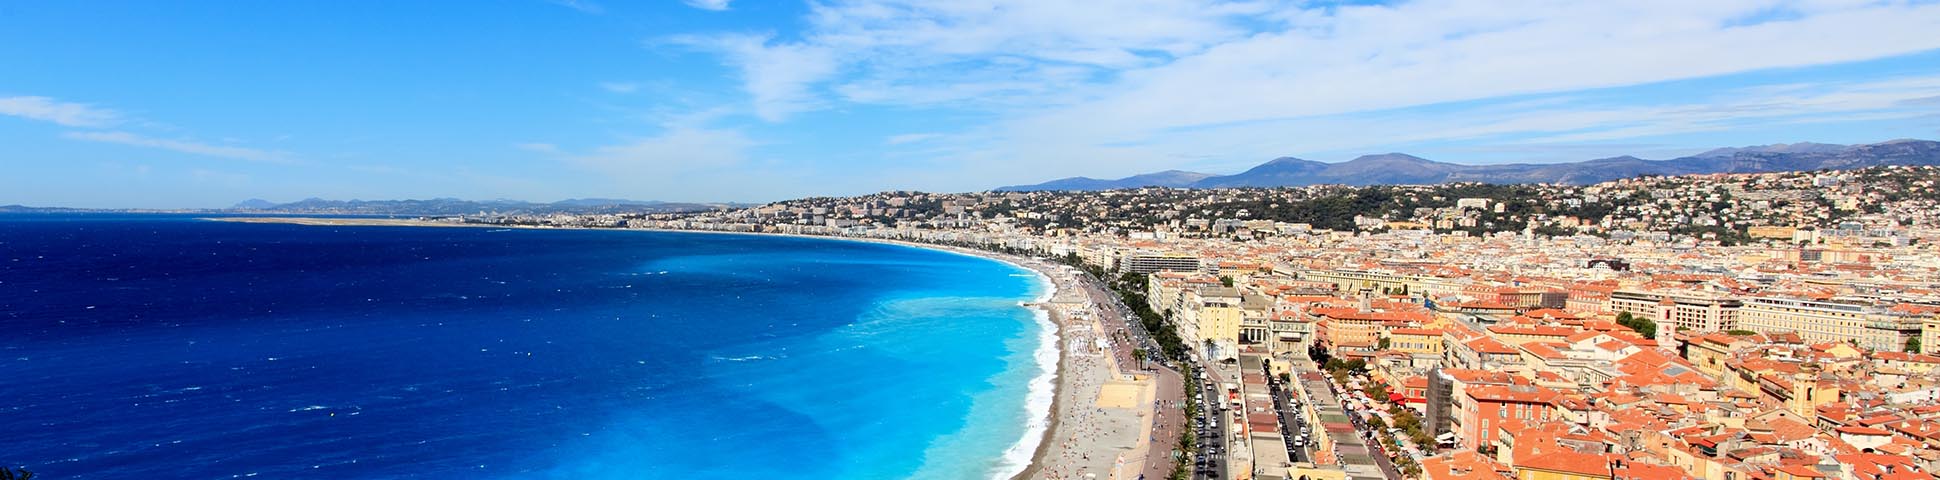 Panoramablick auf Nizza